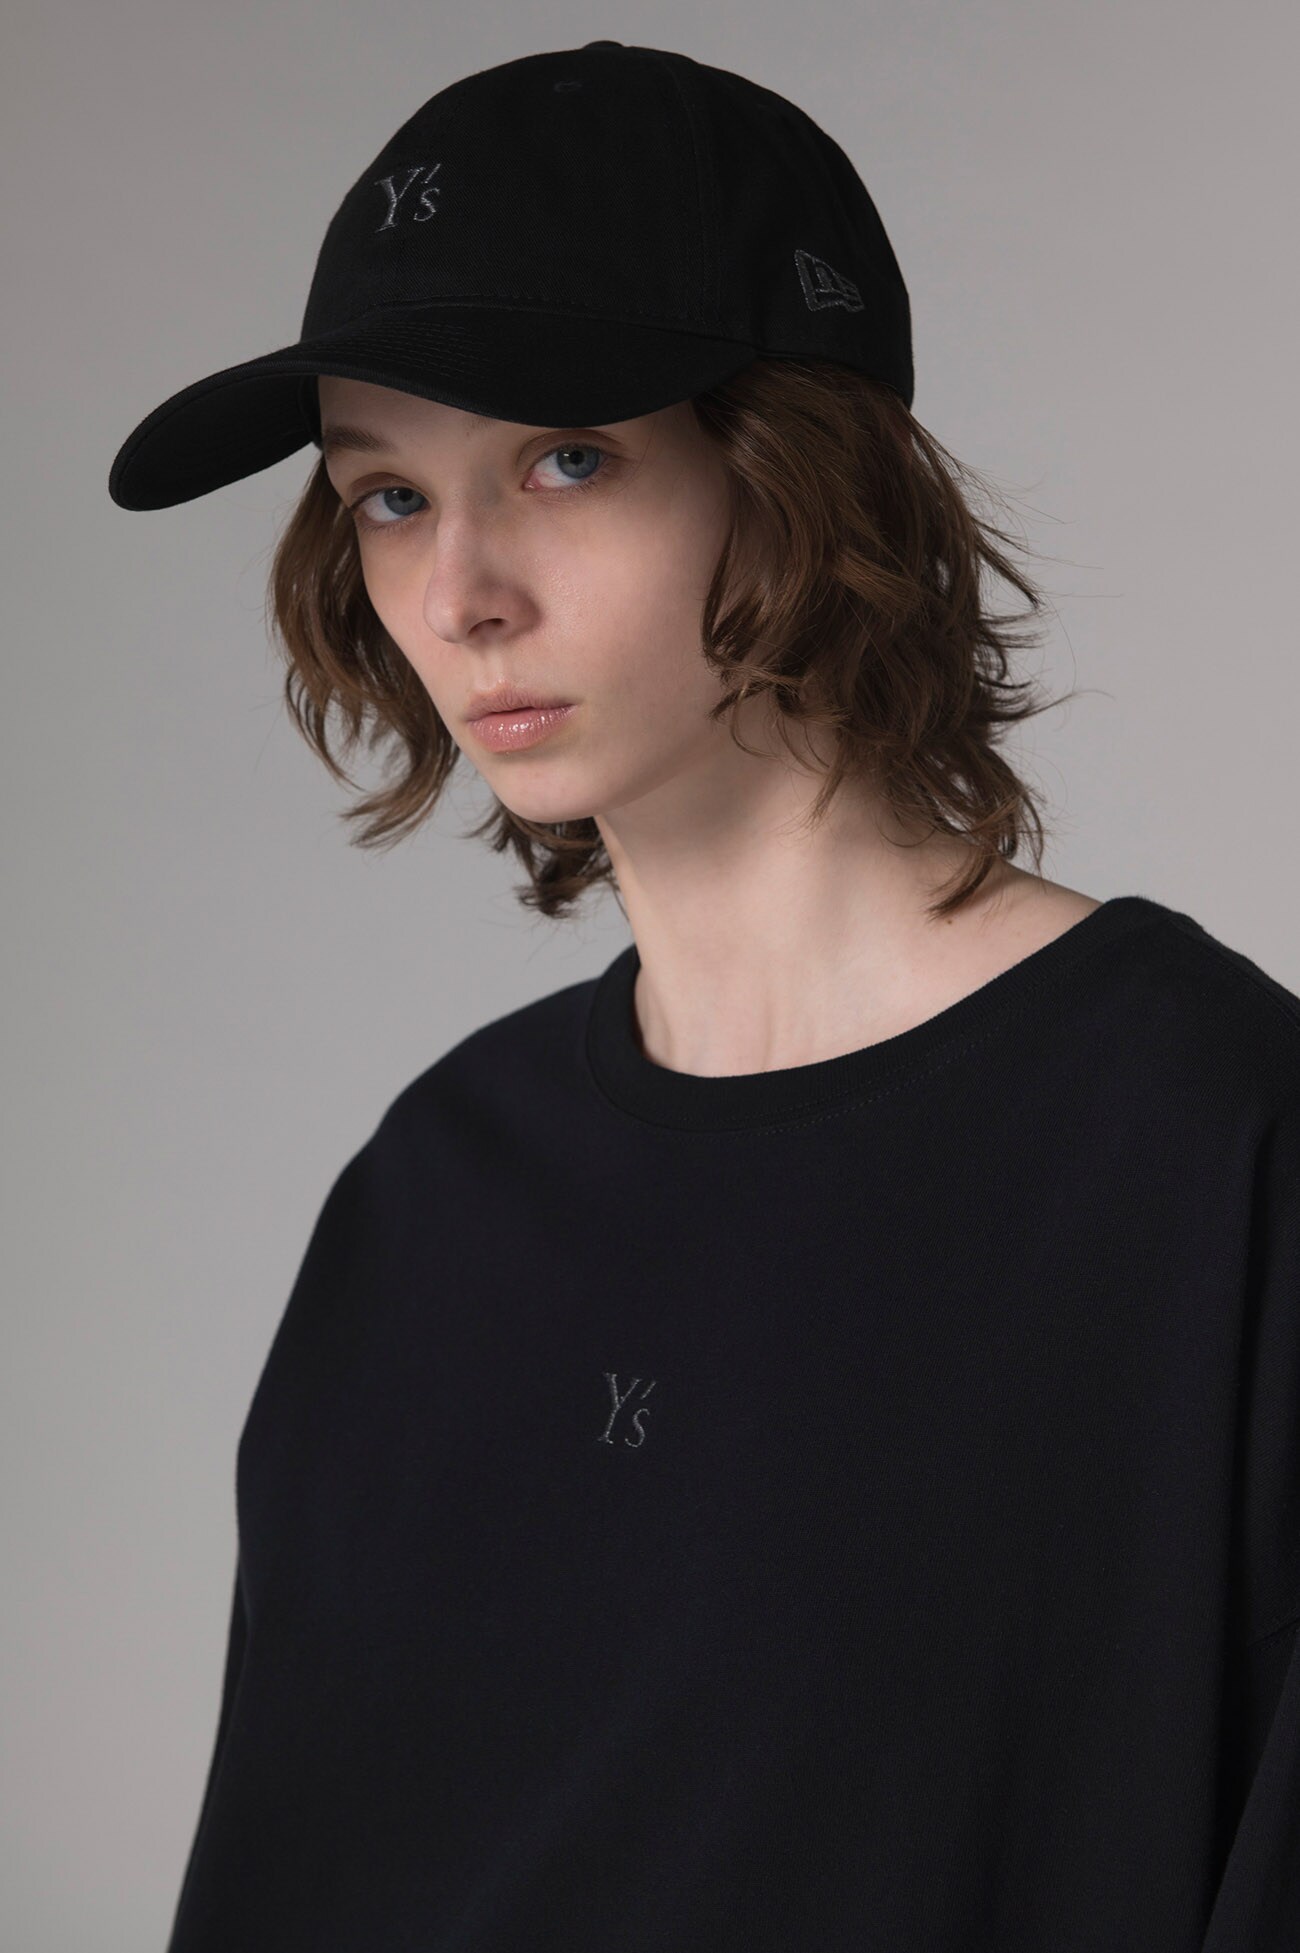 [Y's x New Era]9THIRTY Y's LOGO CAP